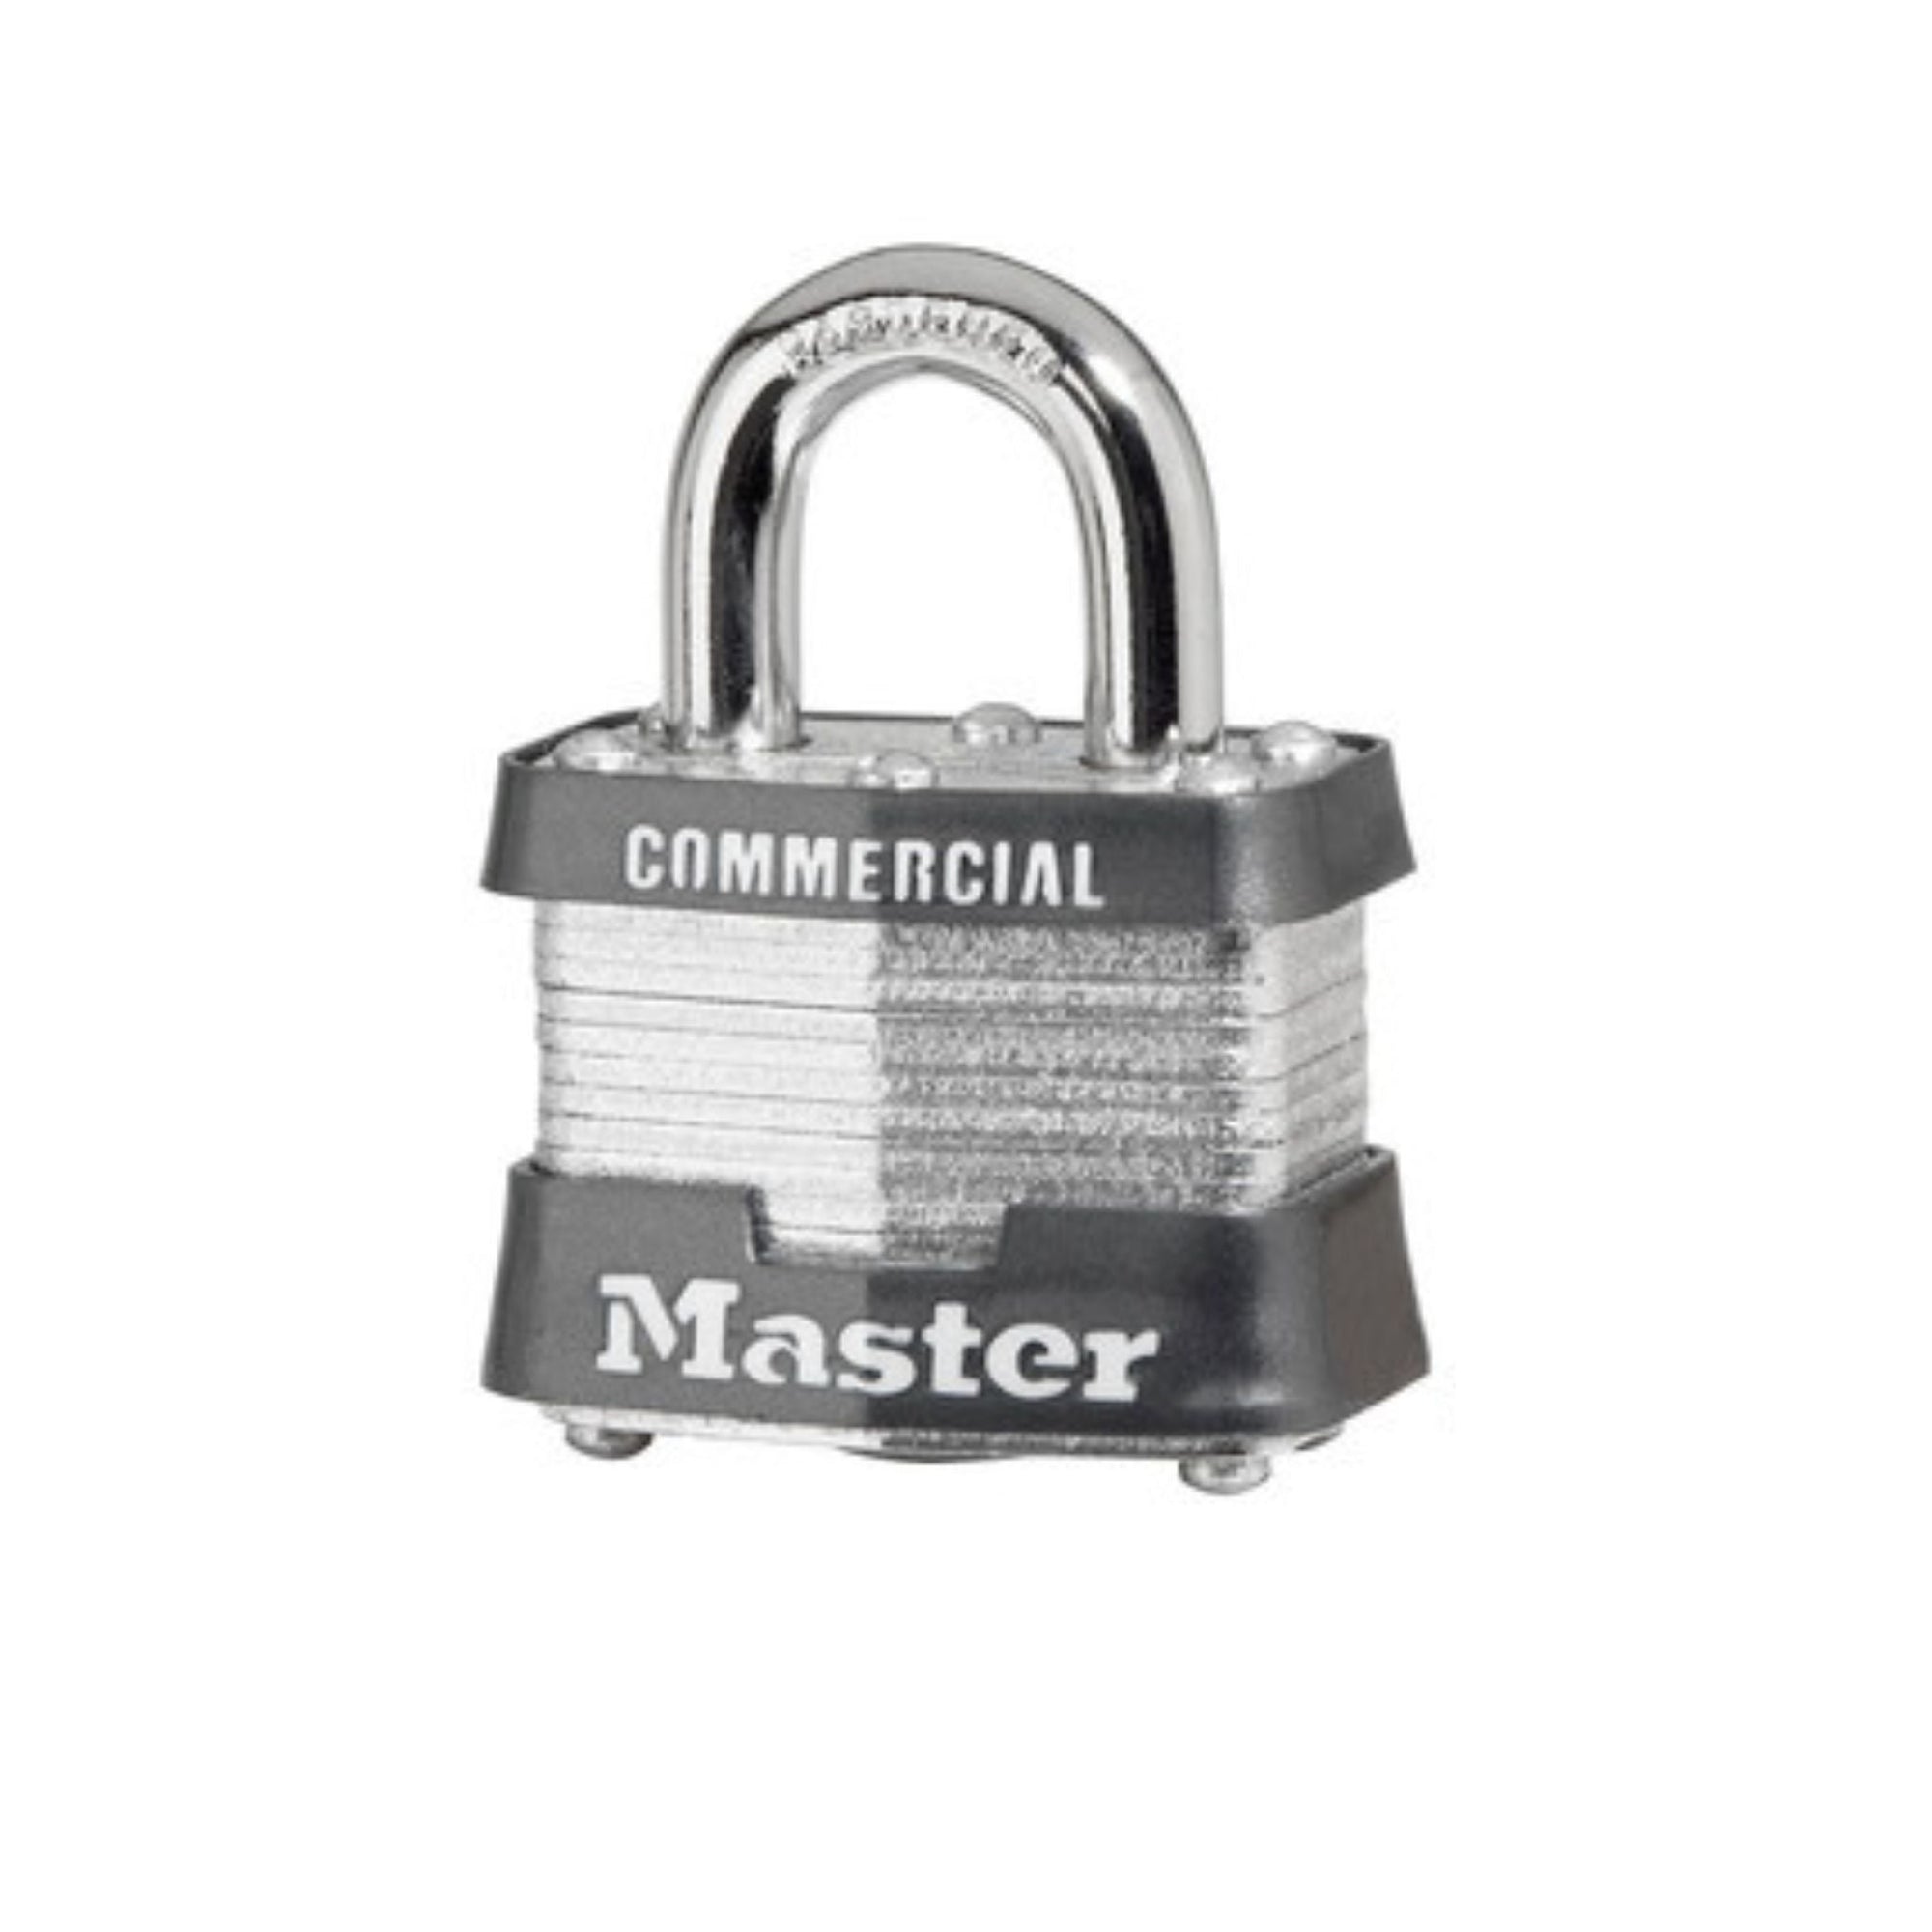 Master Lock 3KA 0302 Lock Laminated steel No. 3 Series Padlock Keyed to Match Existing Key Number KA0302 - The Lock Source